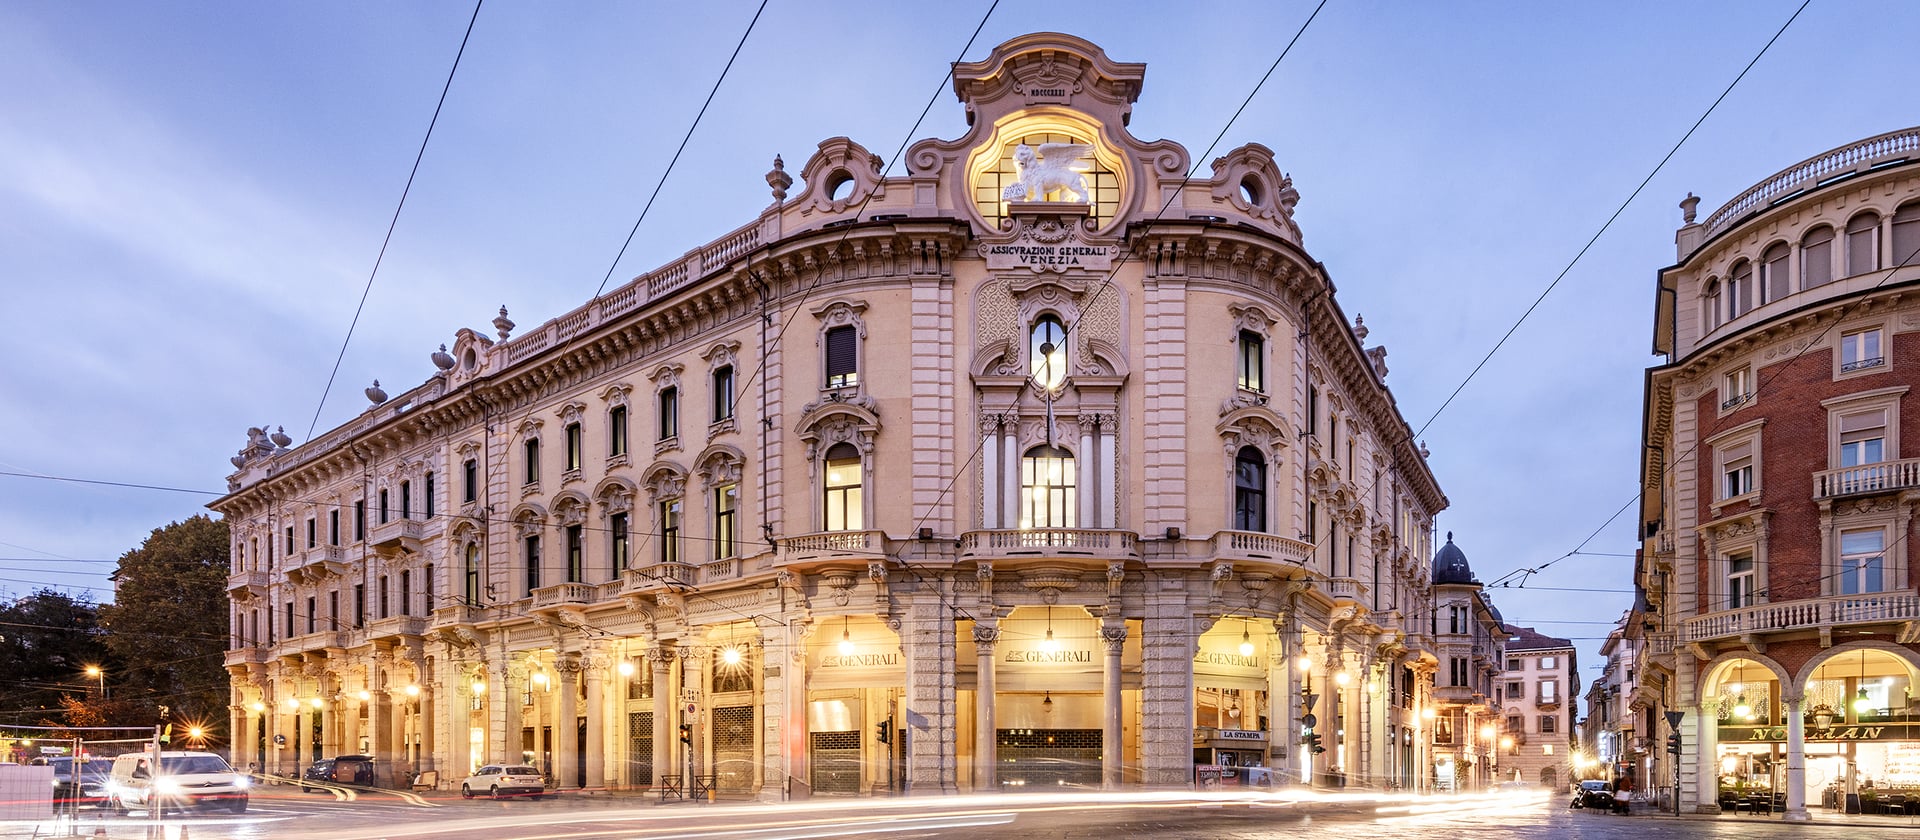 Edificio de oficinas en Turín